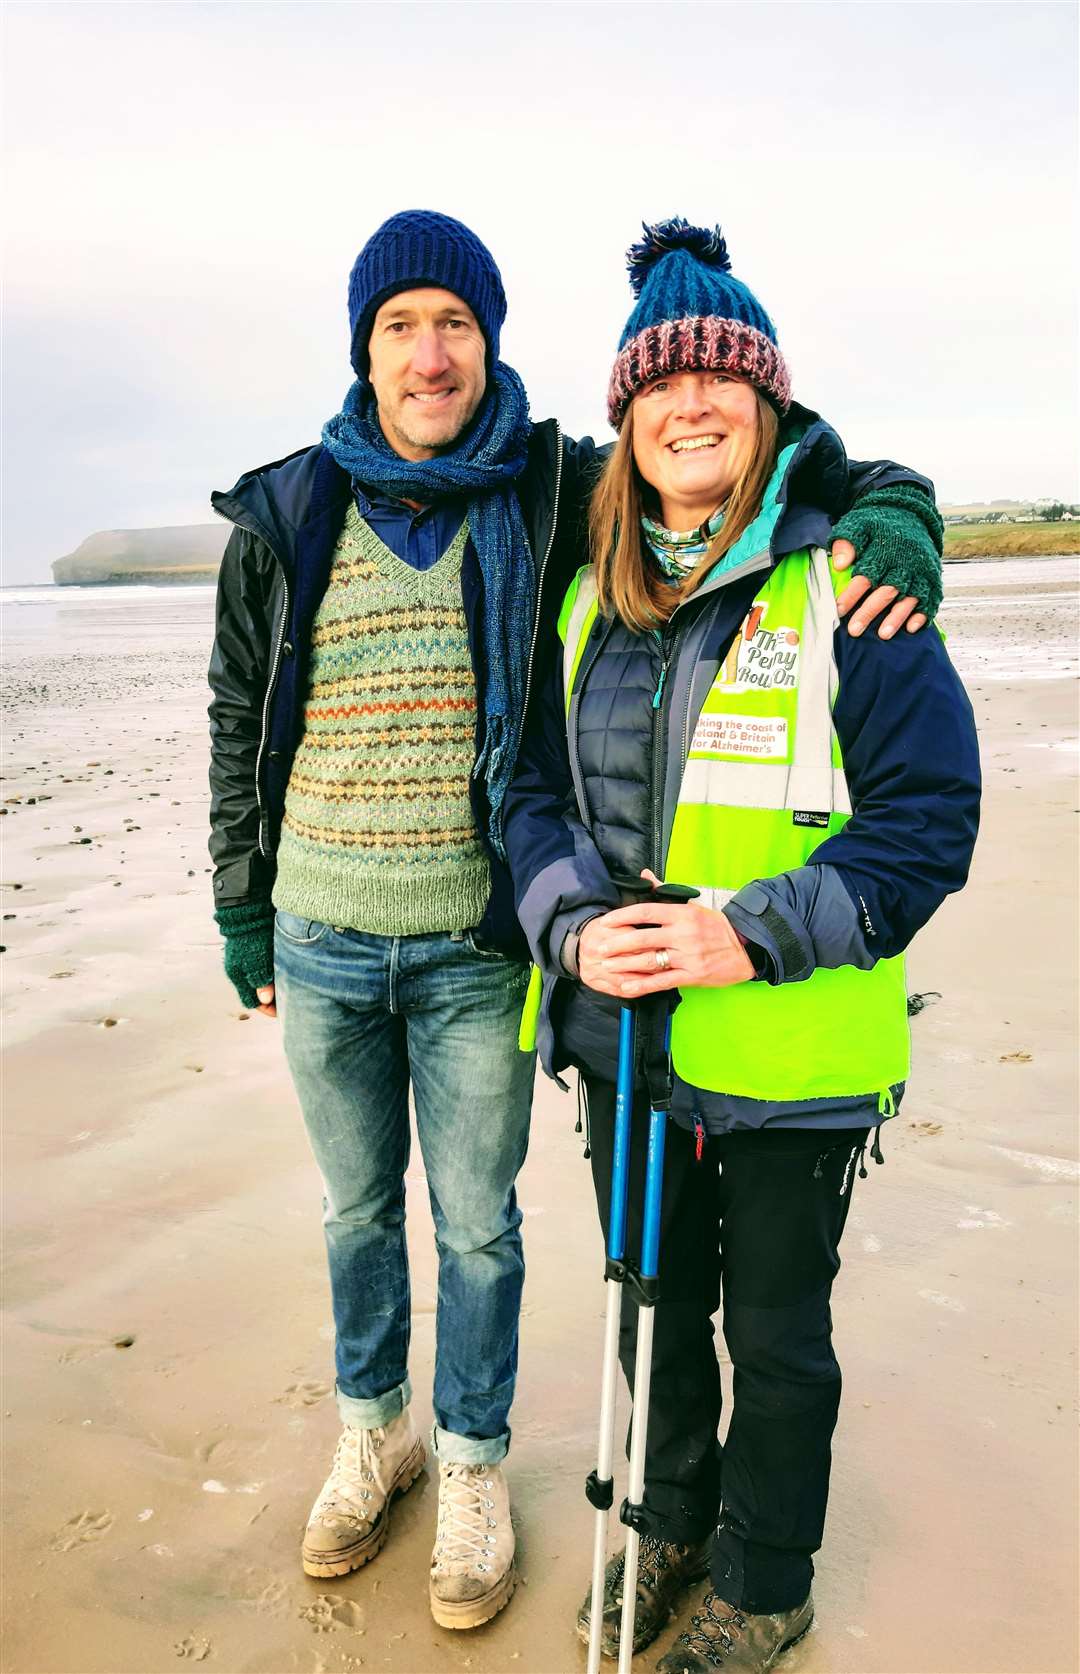 Karen met TV presenter Ben Fogle while walking in Caithness.